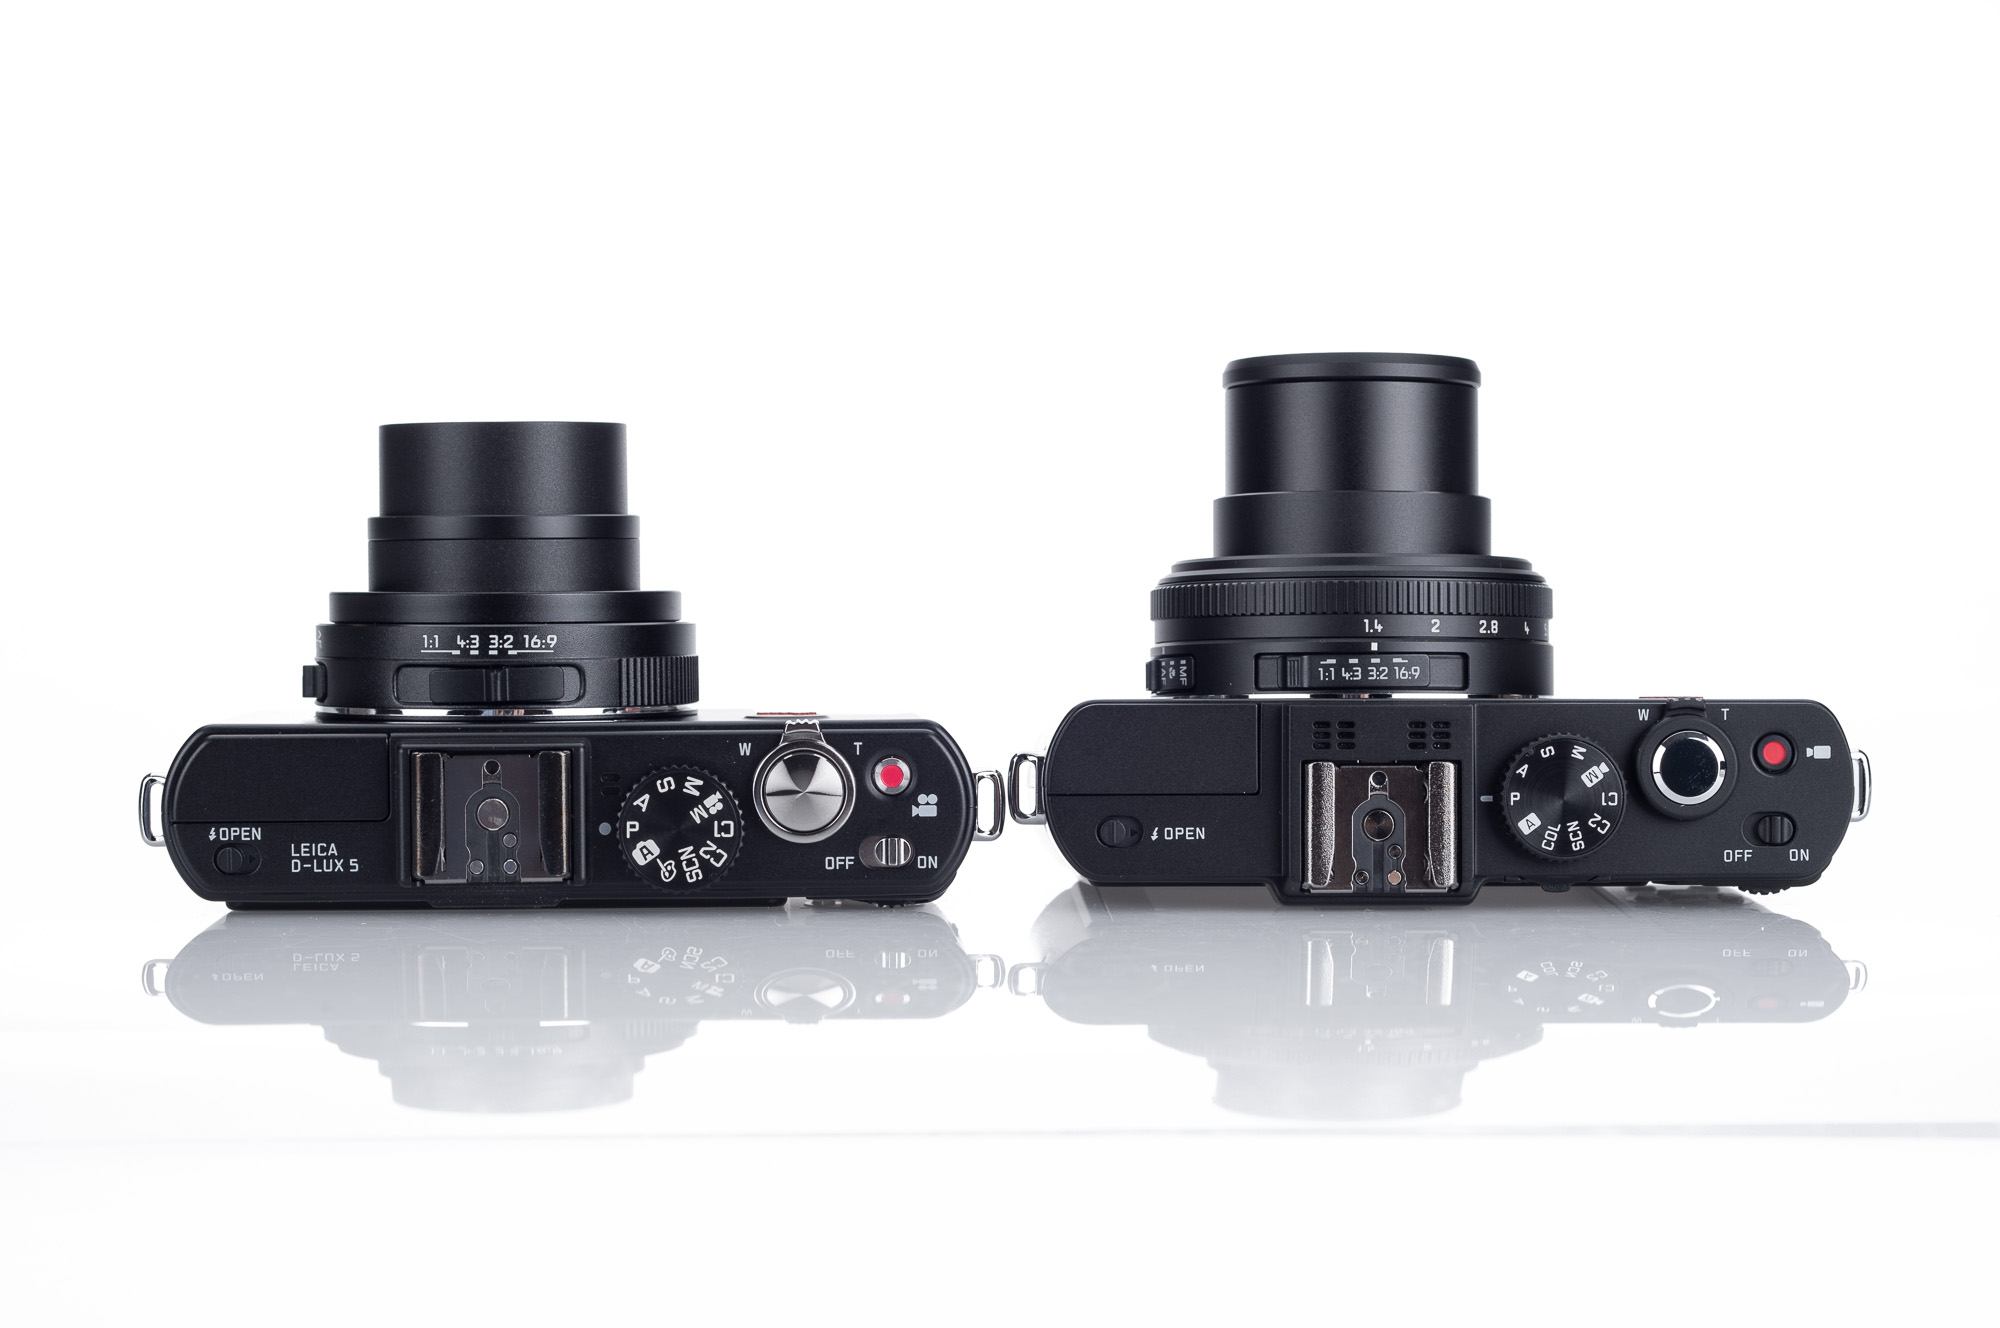 Leica D-Lux 3 Looks Curiously Familiar